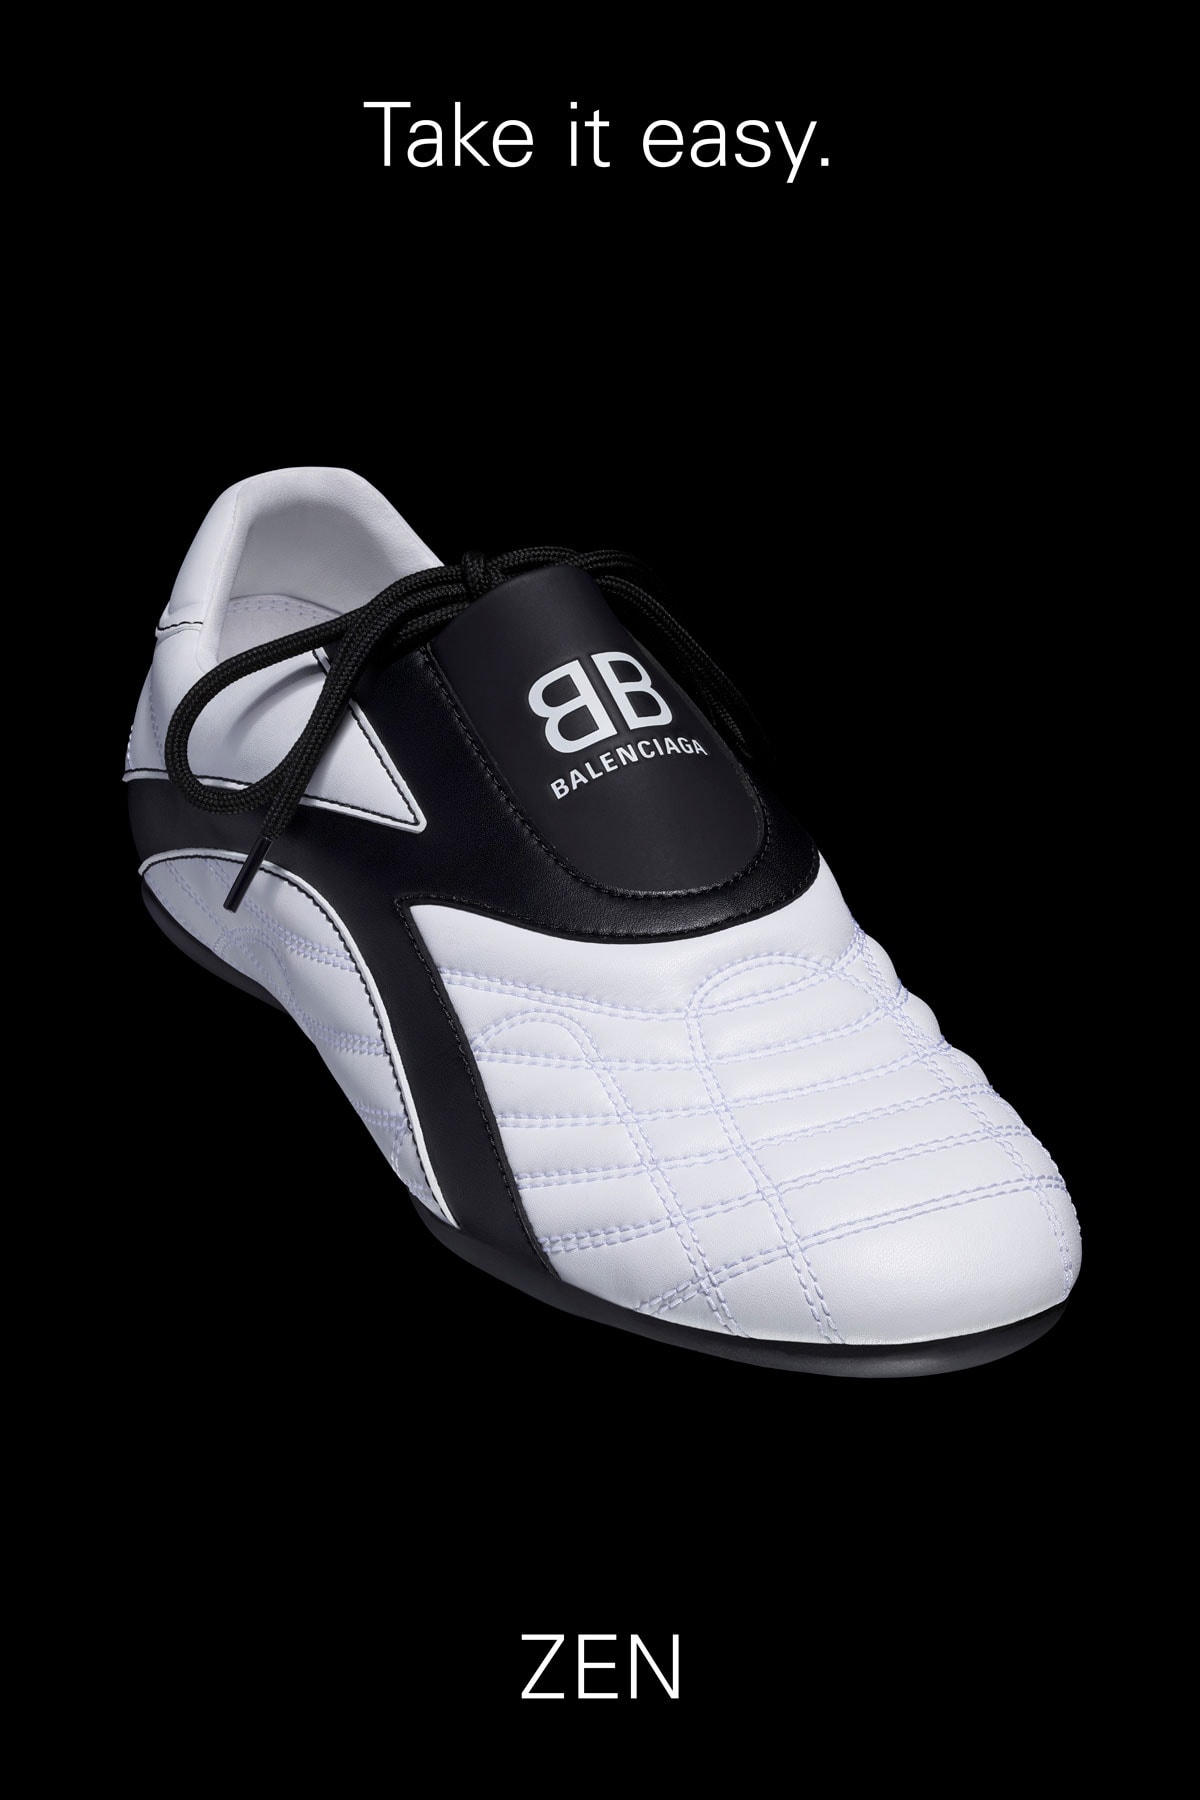 Balenciaga Zen Sneaker Shoe White/Black